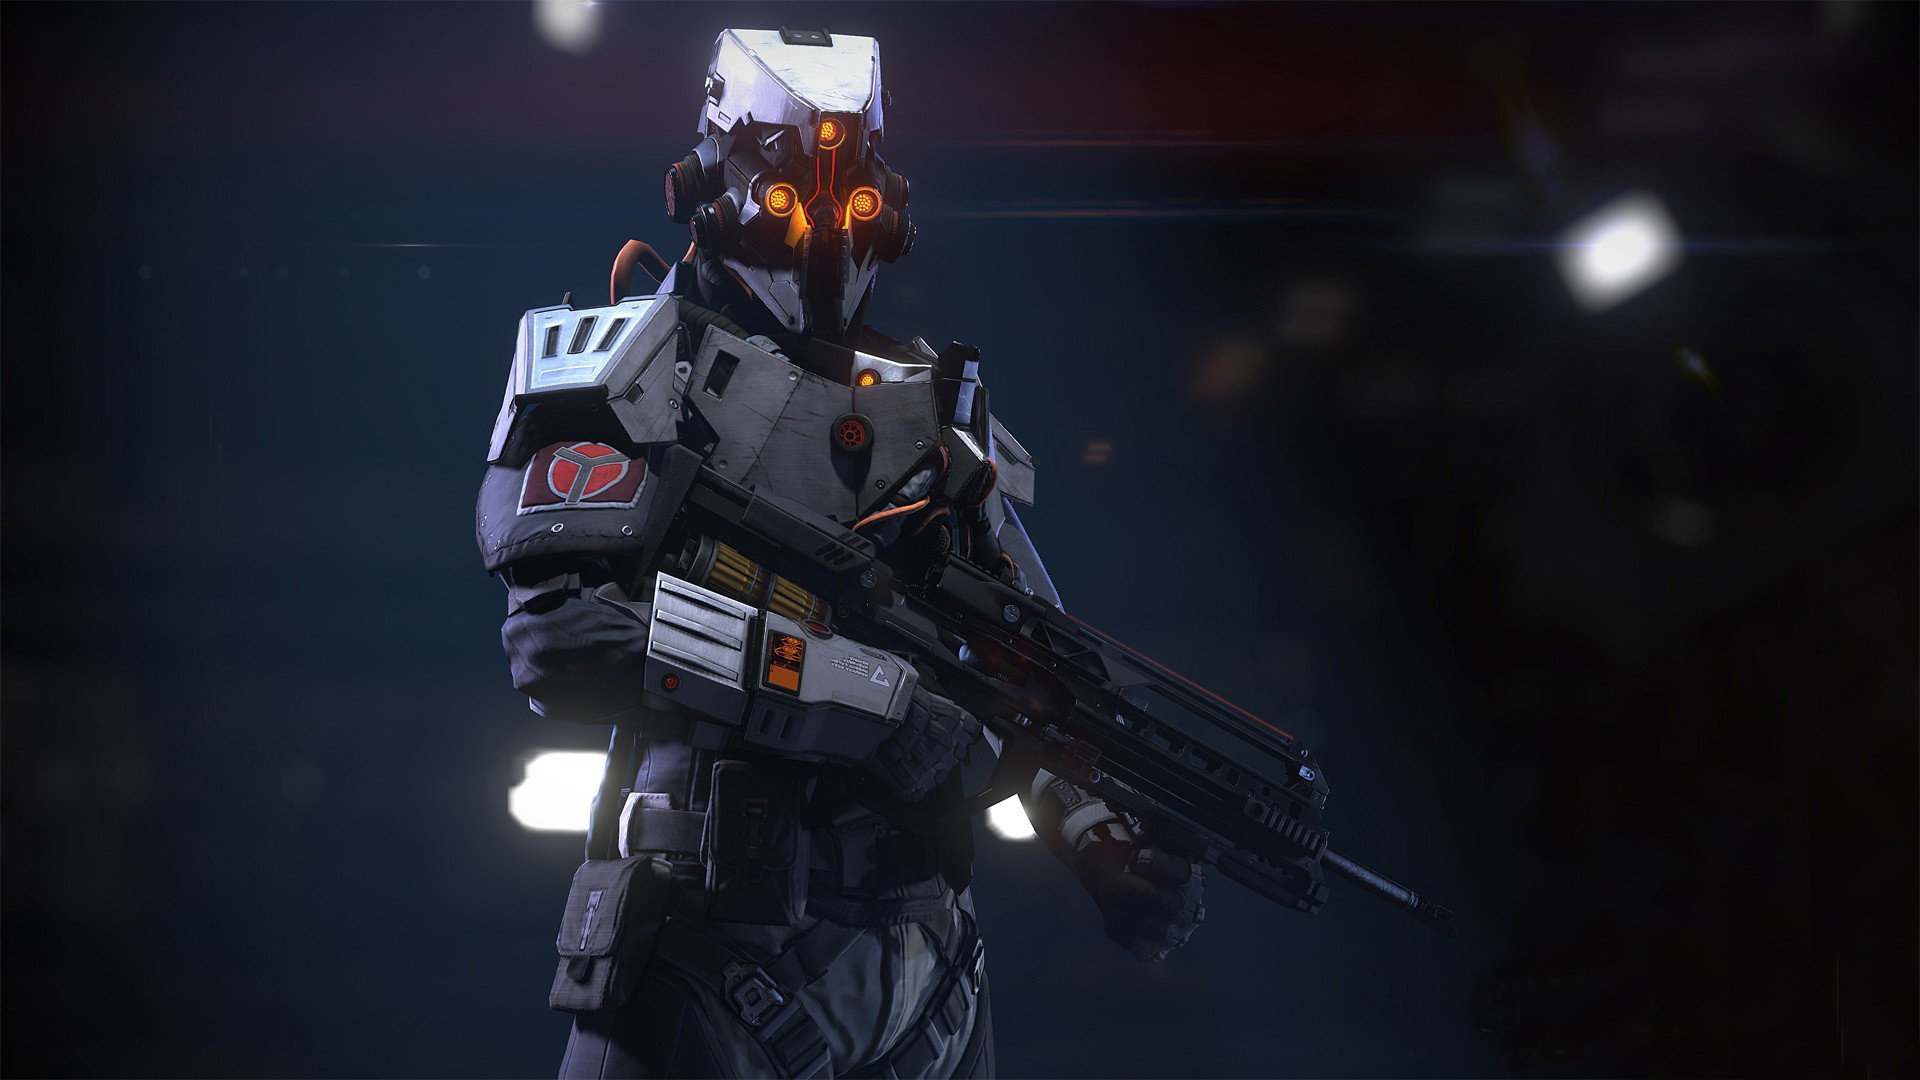 CGi Soldier Armor Weapon Science Fiction Cyborg Killzone Video Games Futuristic Helmet Gun Killzone  1920x1080